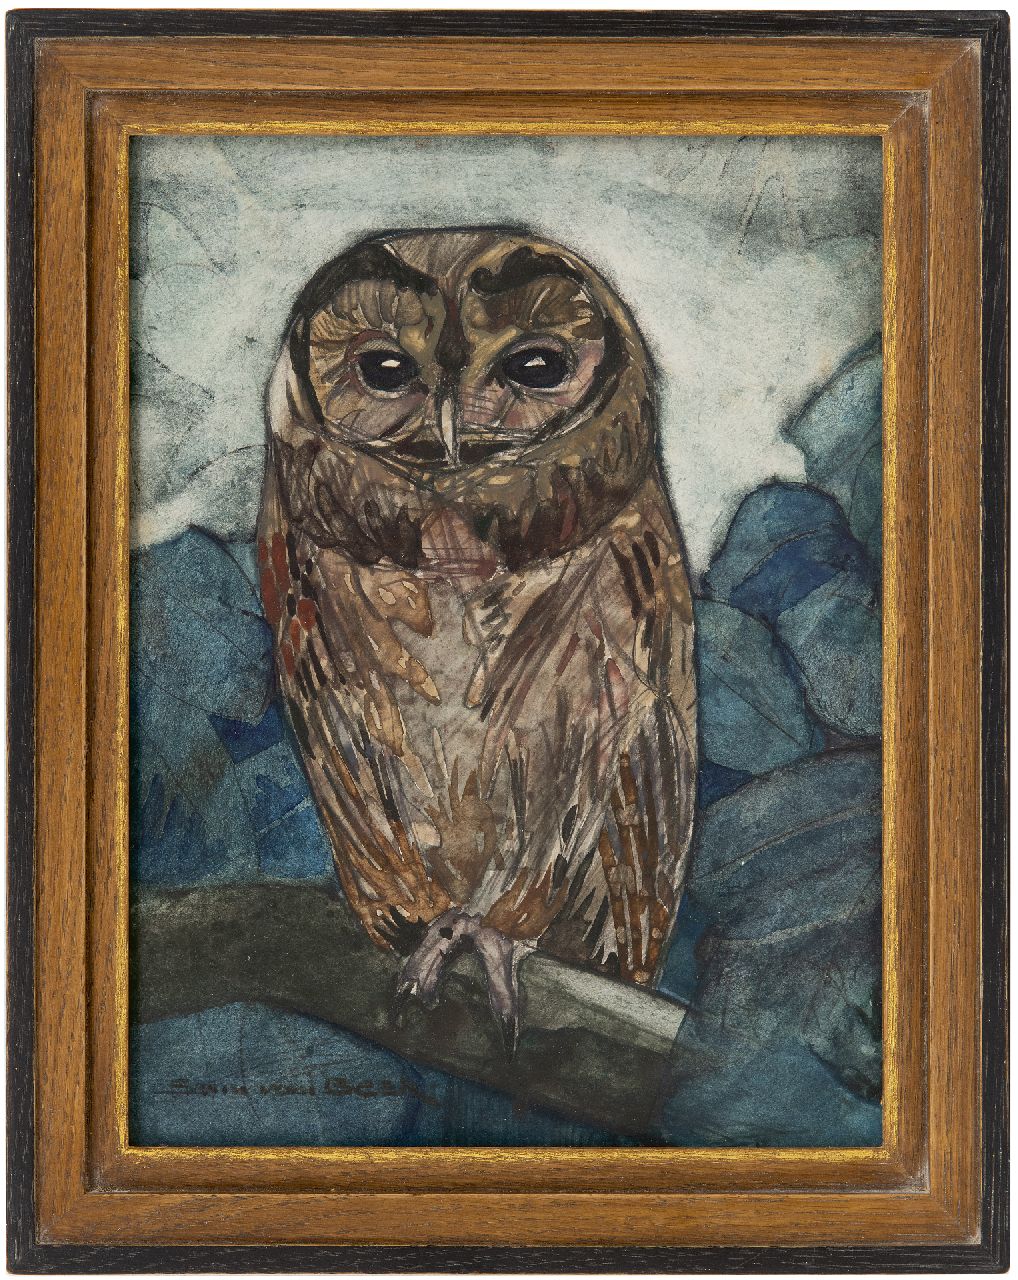 Beek S. van | Samuel Joseph 'Sam' van Beek | Watercolours and drawings offered for sale | Wood owl, watercolour on paper 25.5 x 19.2 cm, signed l.l.